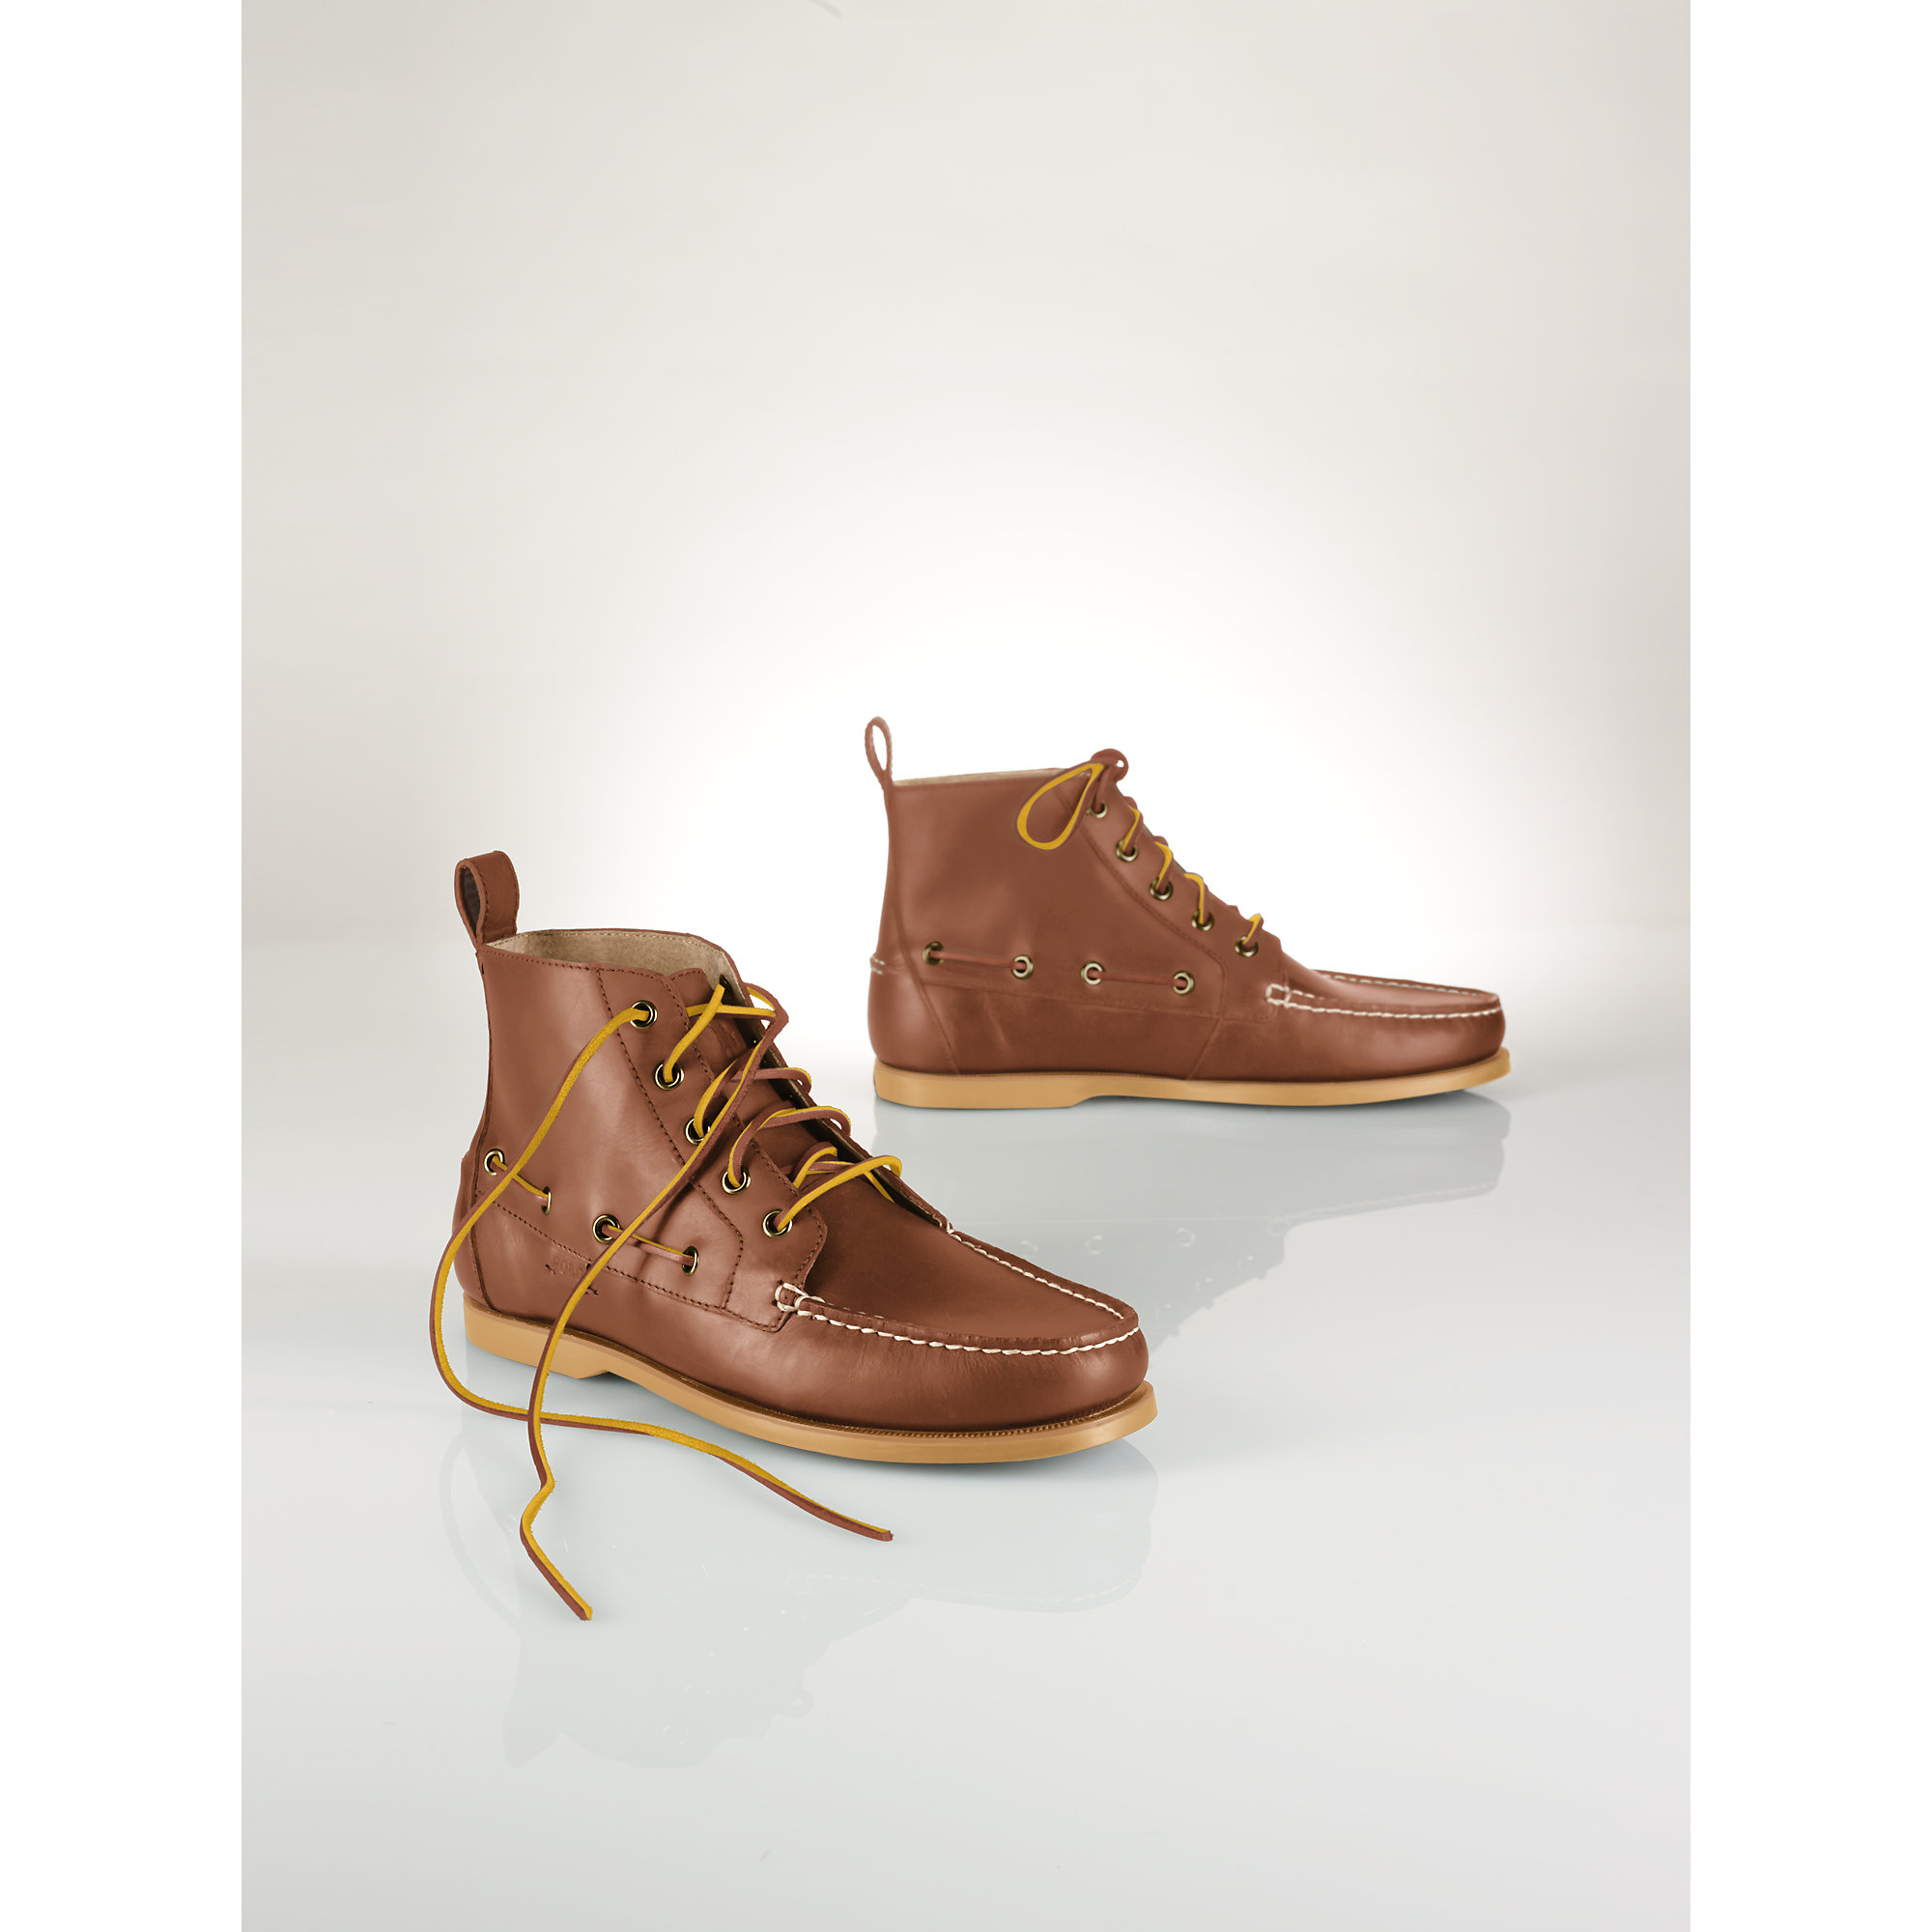 Polo Ralph Lauren Leather Barrott Boot in Brown for Men - Lyst